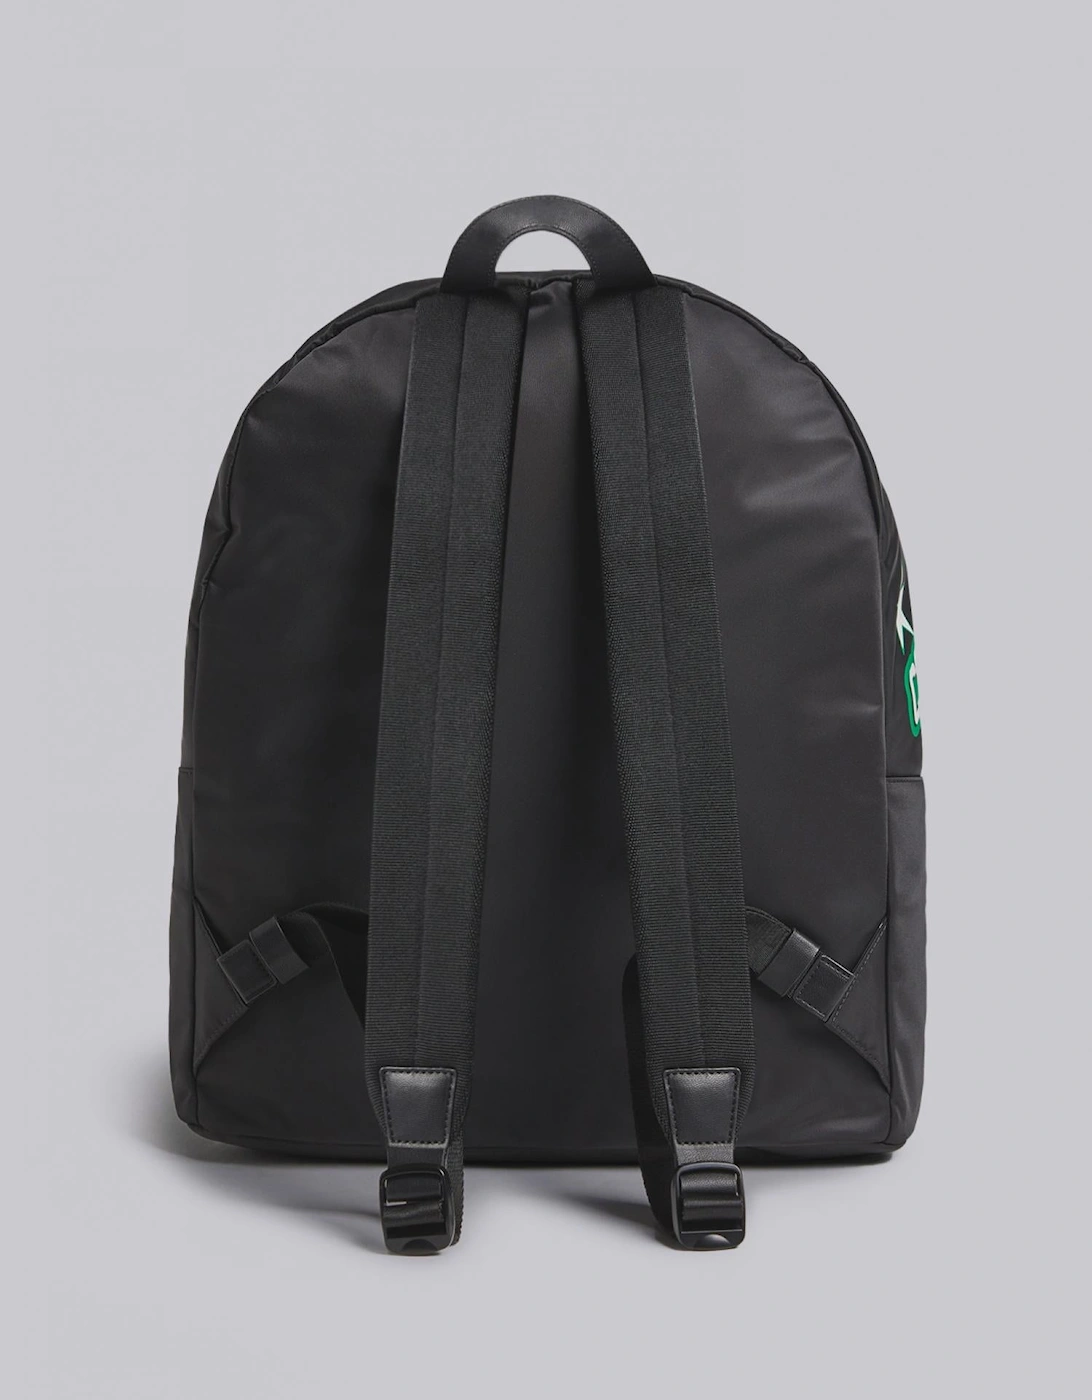 Traveller Patch Backpack in Black